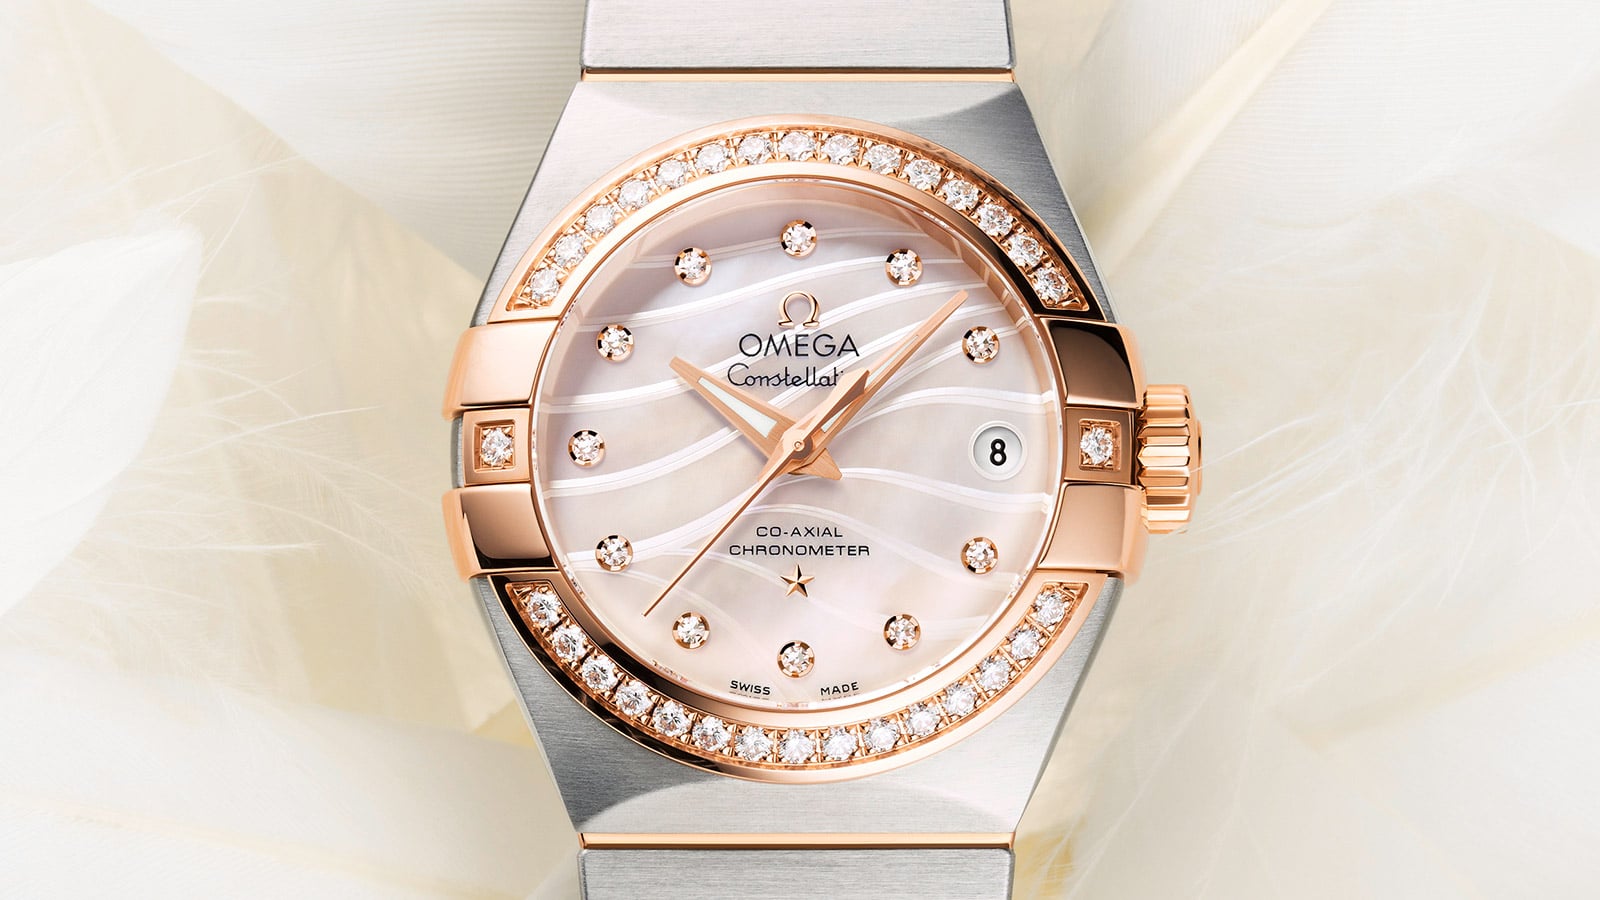 Omega Speedmaster Professional Moonwatch Master Chronometer 42mm Men's Watch 310.32.42.50.01.001